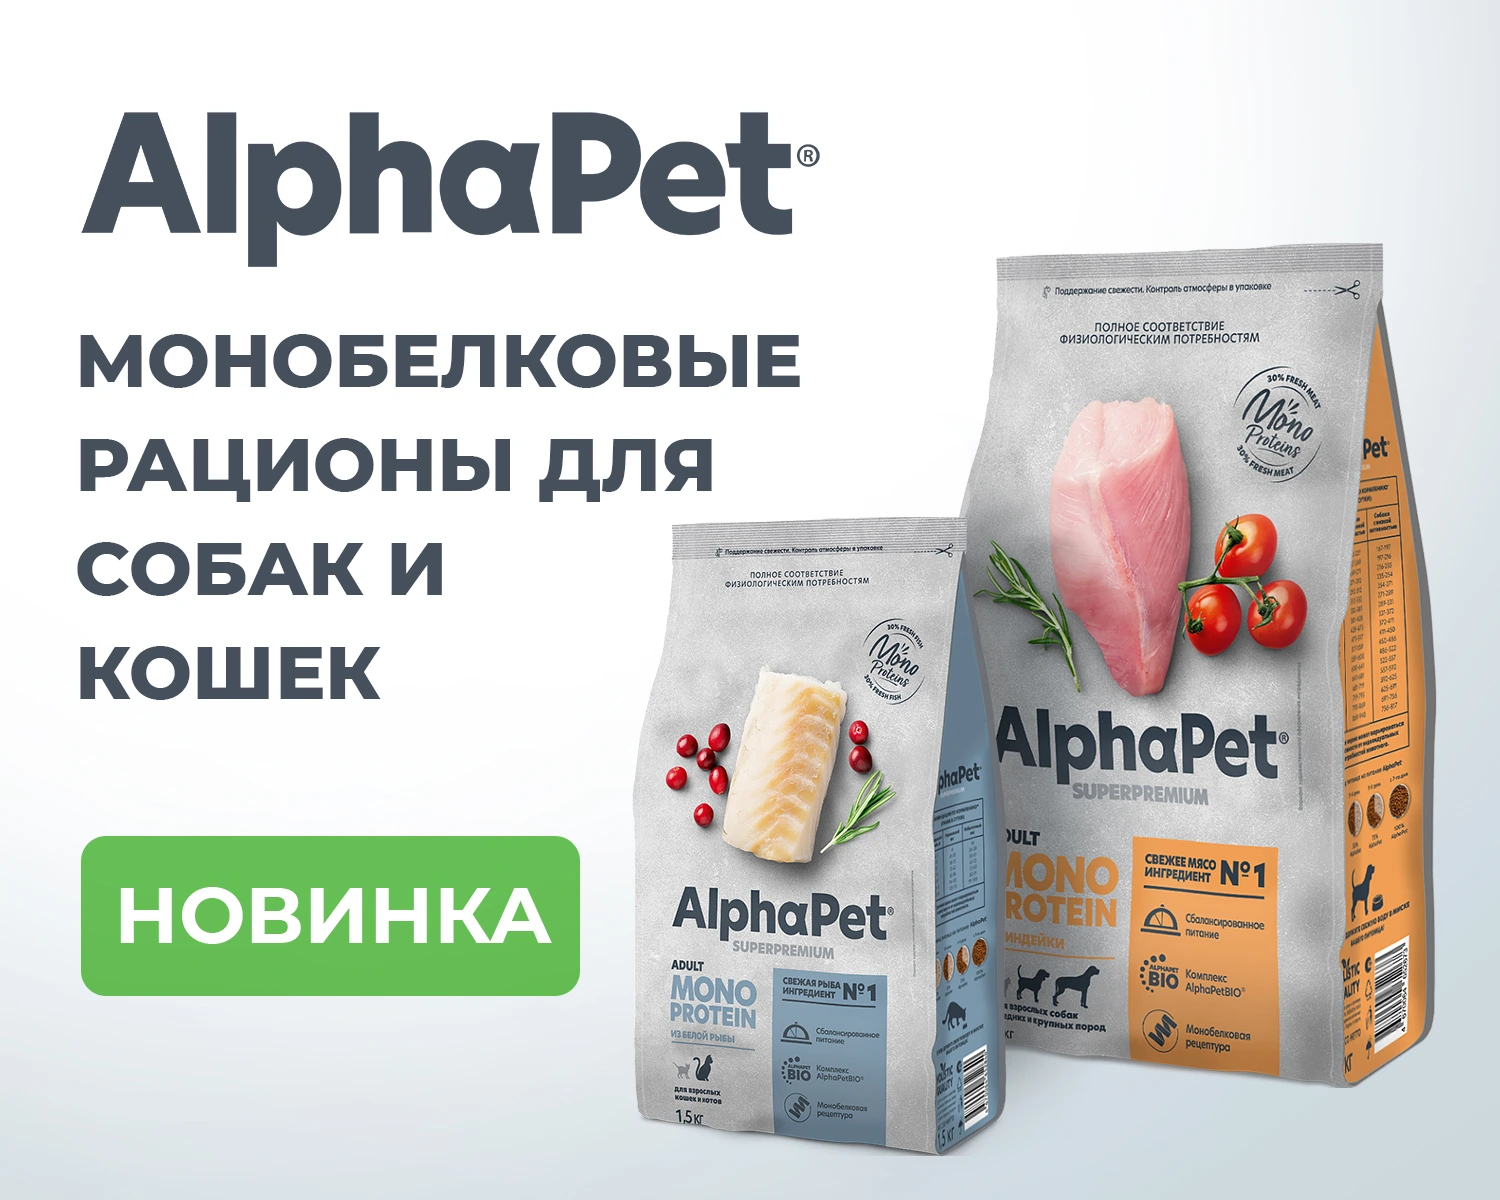 Корм Alphapet Monoprotein - Альфапет монопротеин корм для собак и кошек